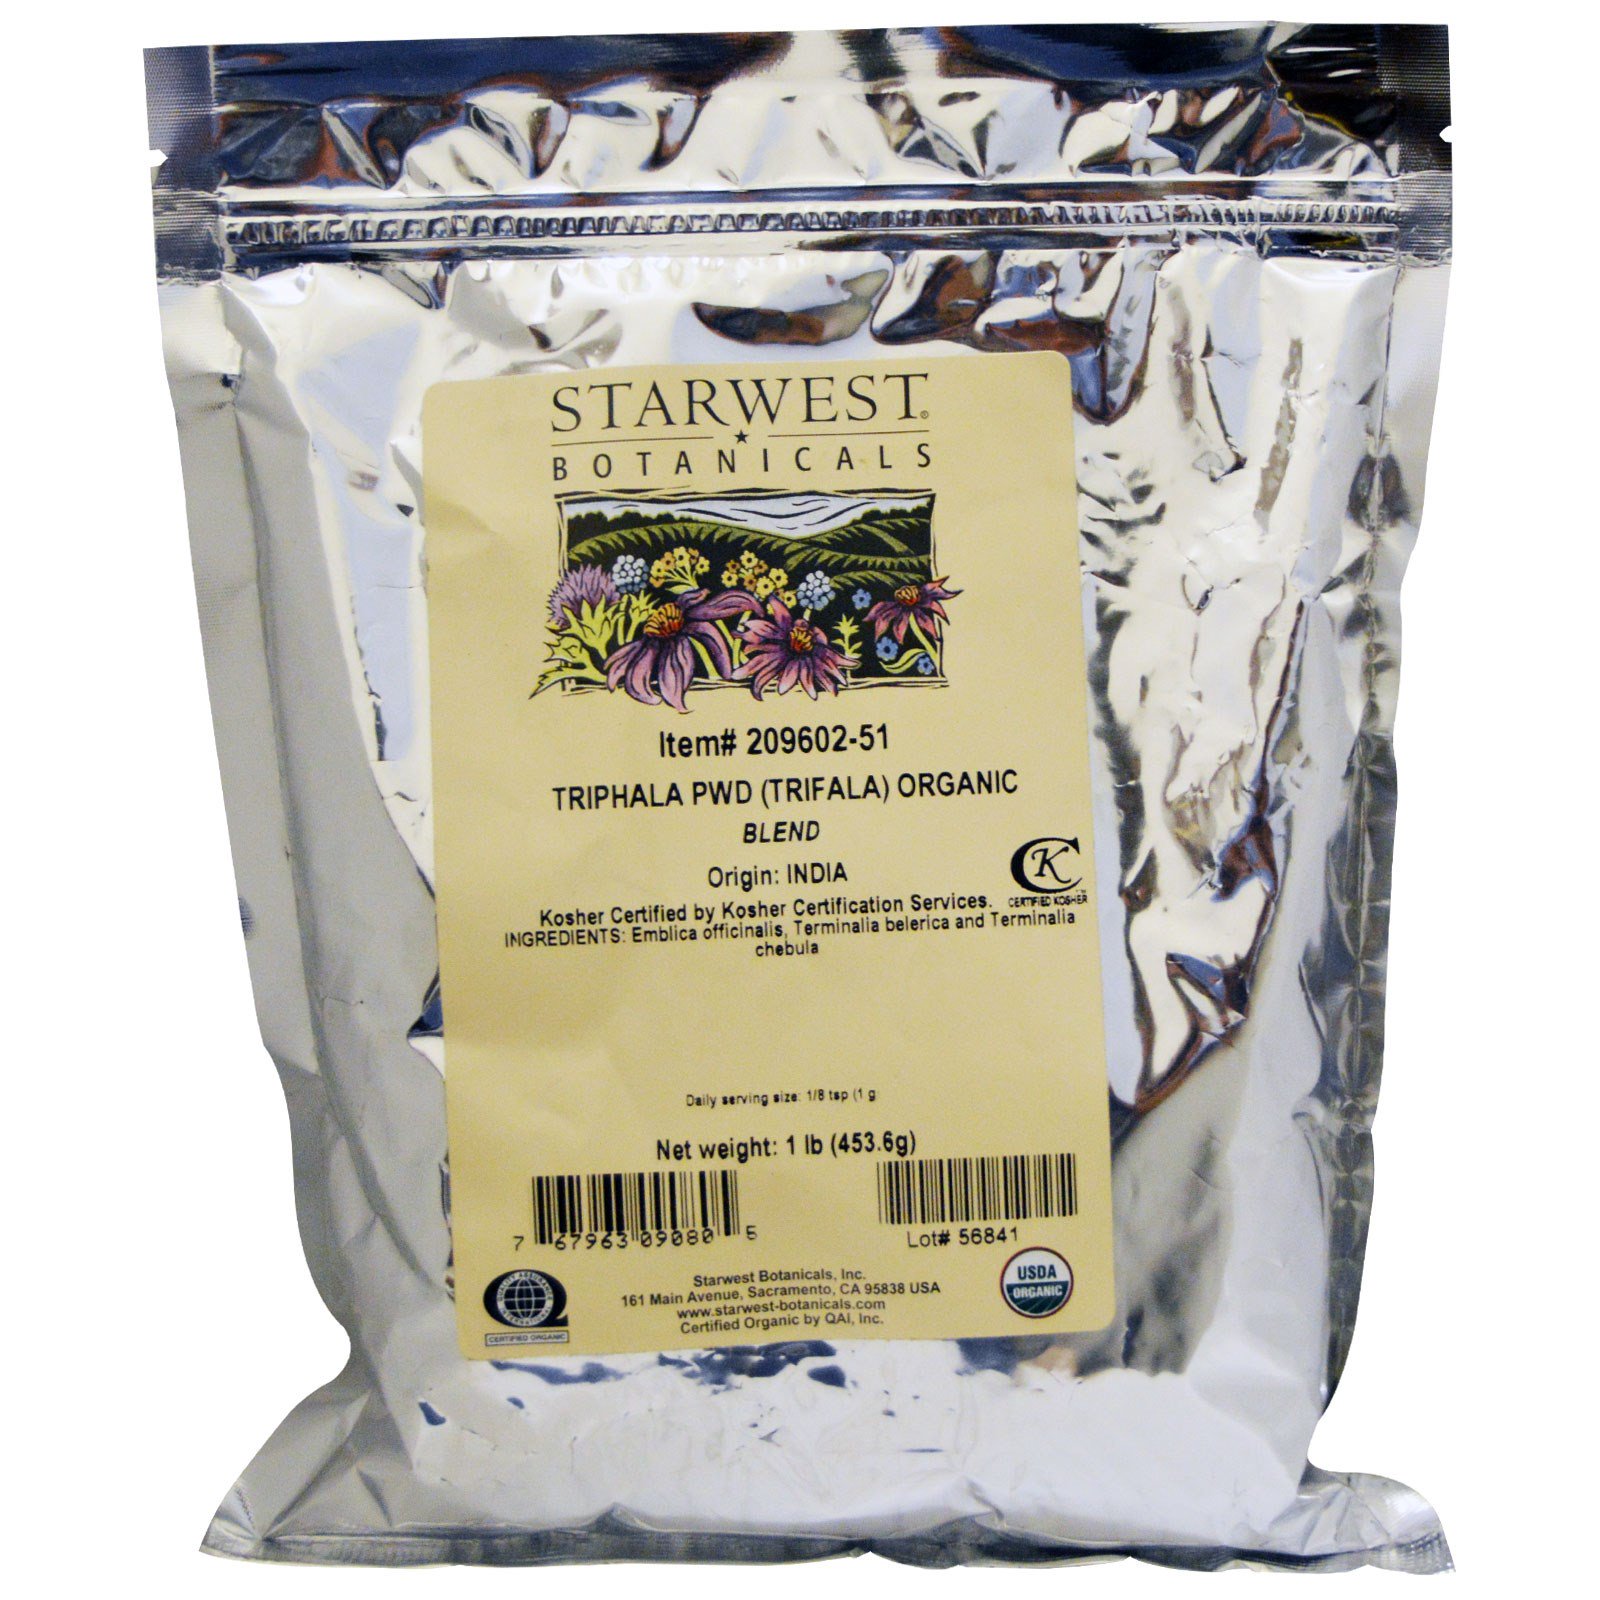 Starwest Botanicals, Organic Triphala PWD (Trifala) Blend, 1 lb (453.6